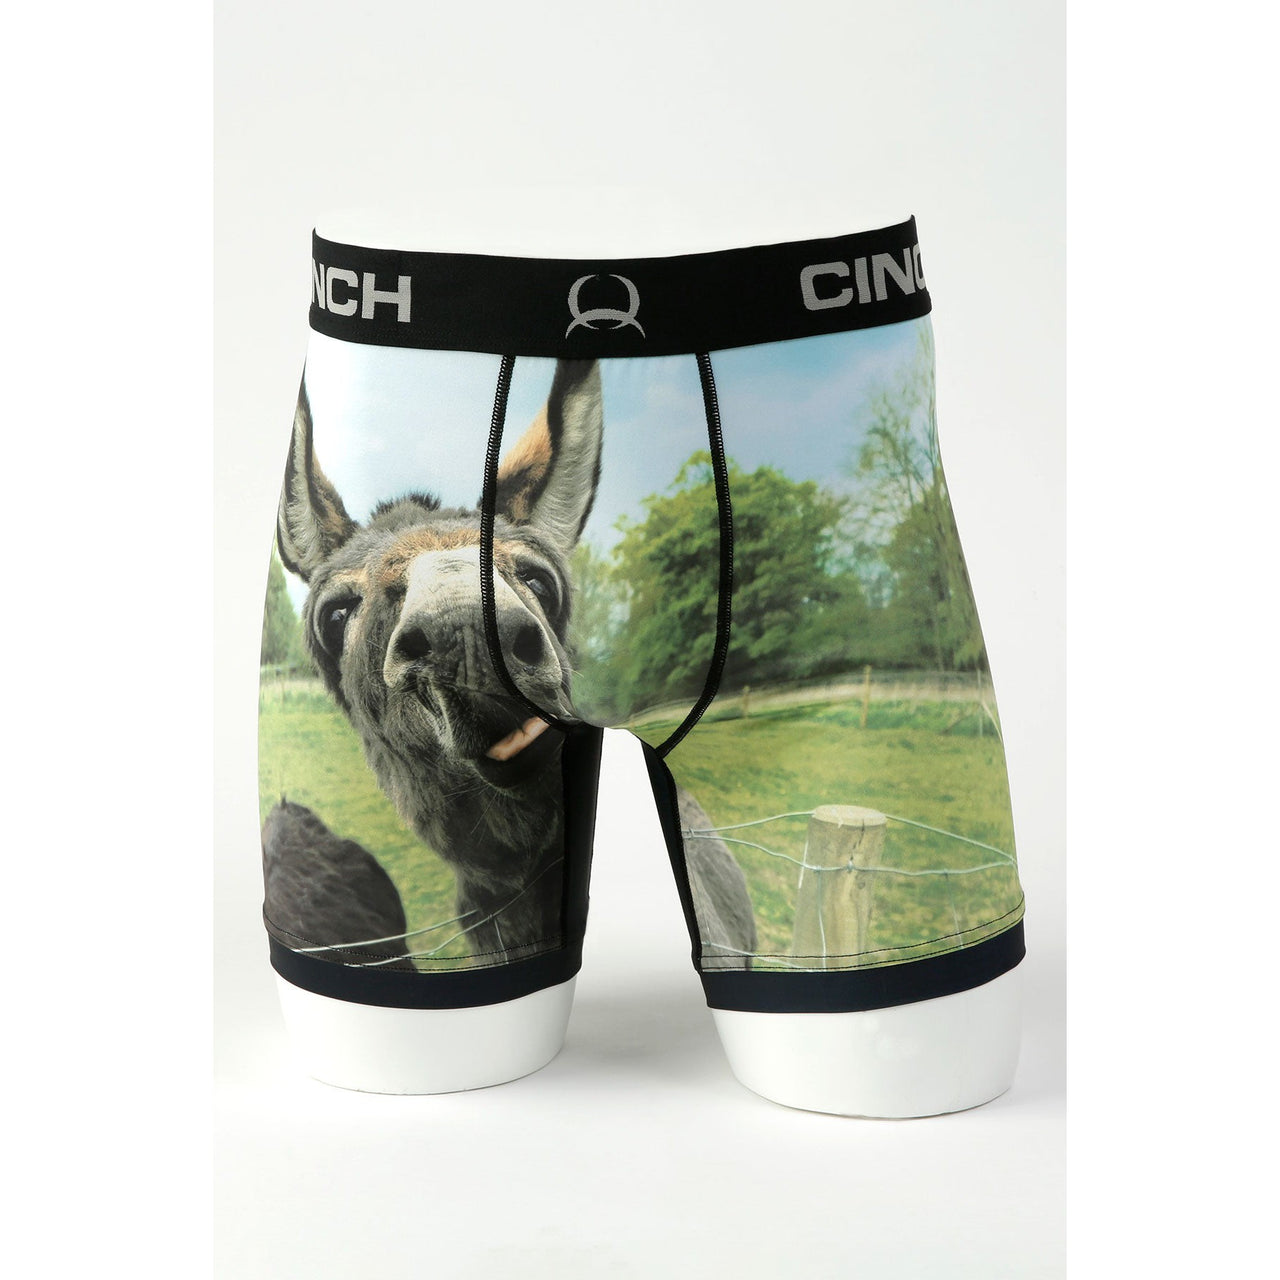 Cinch Men's 6" Donkey Boxer Briefs - Multi